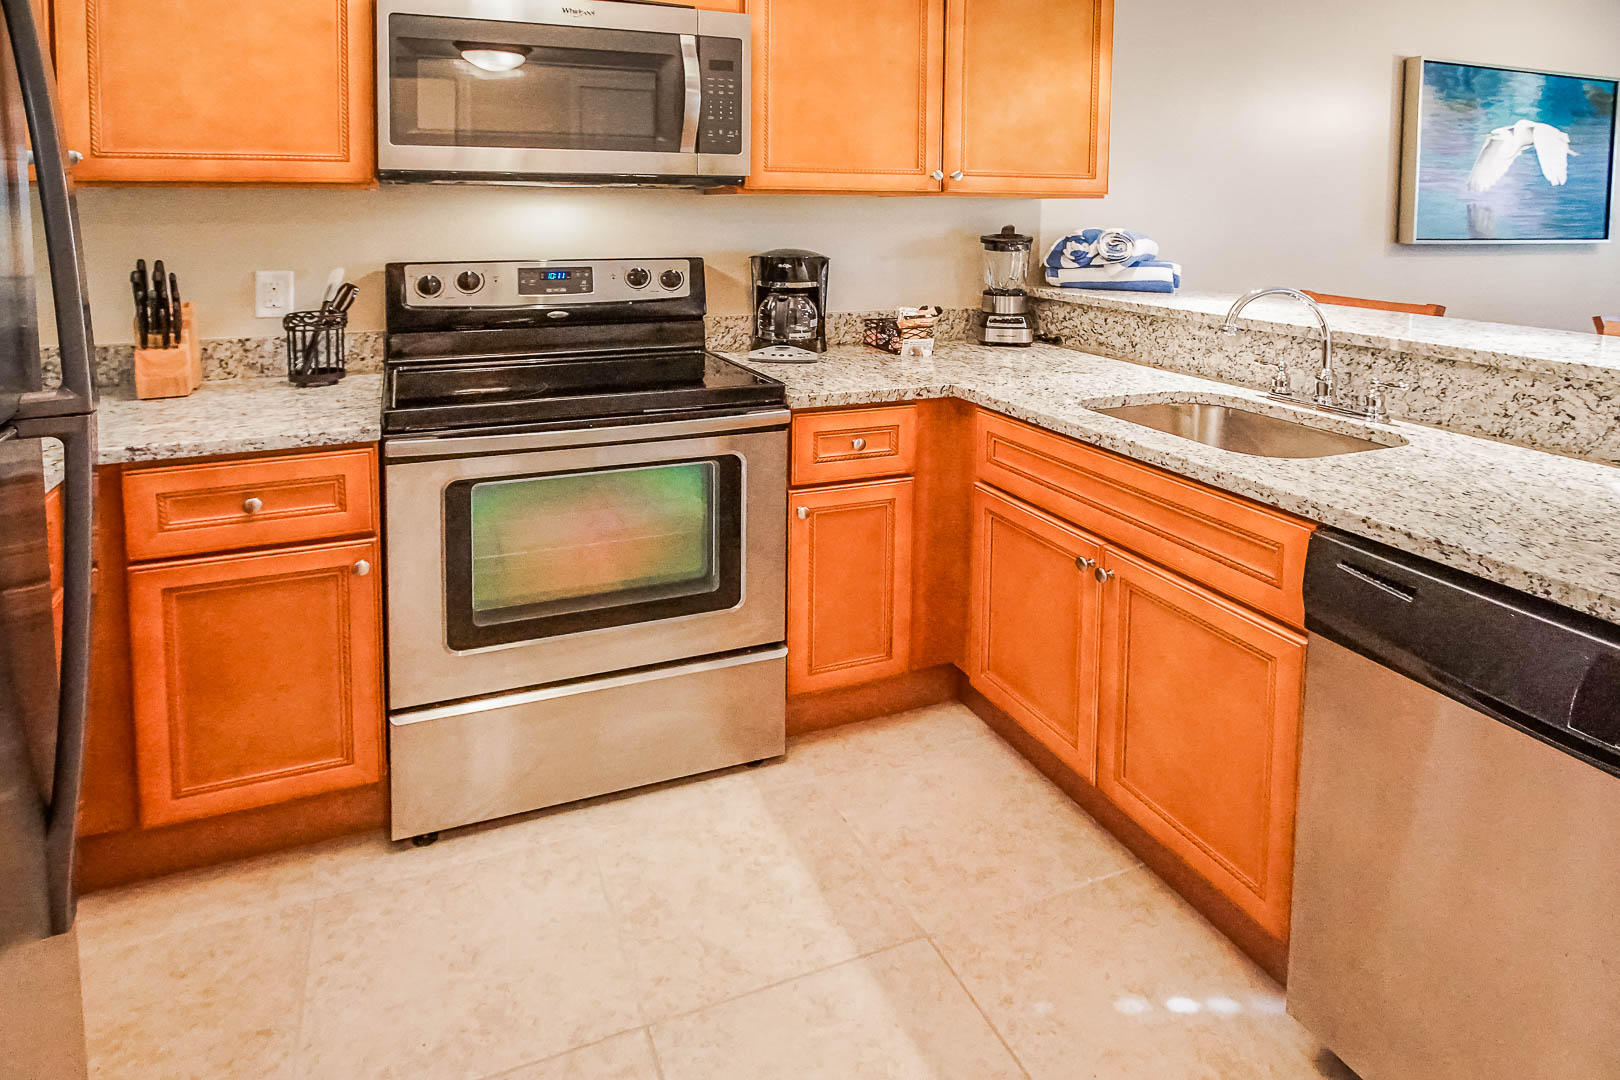 A spacious kitchen area at VRI's Fantasy World Resort in Florida.